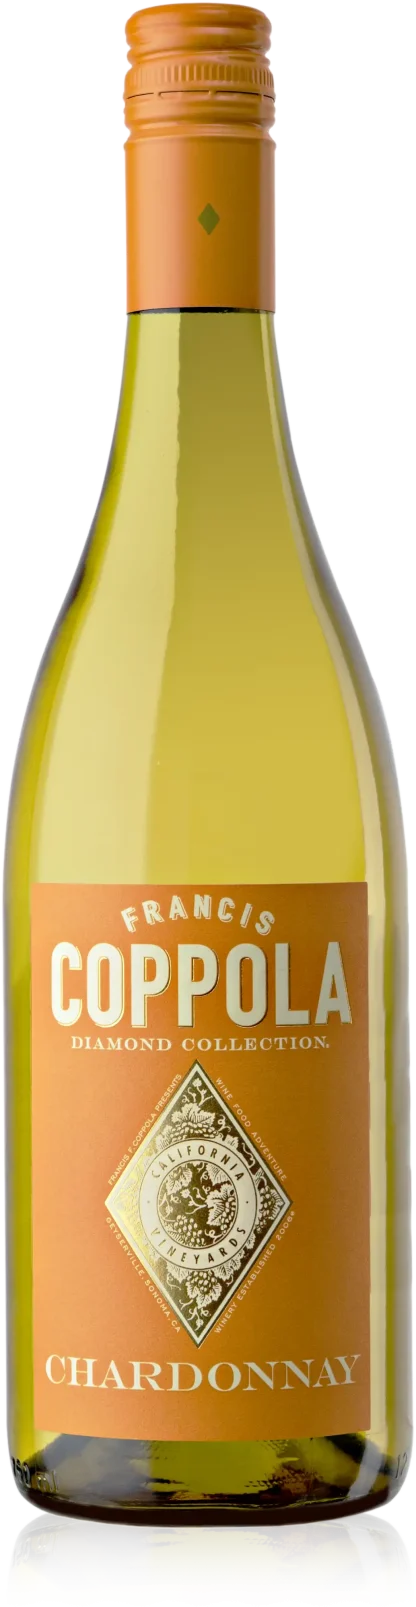 Coppola, Diamond Collection, Chardonnay